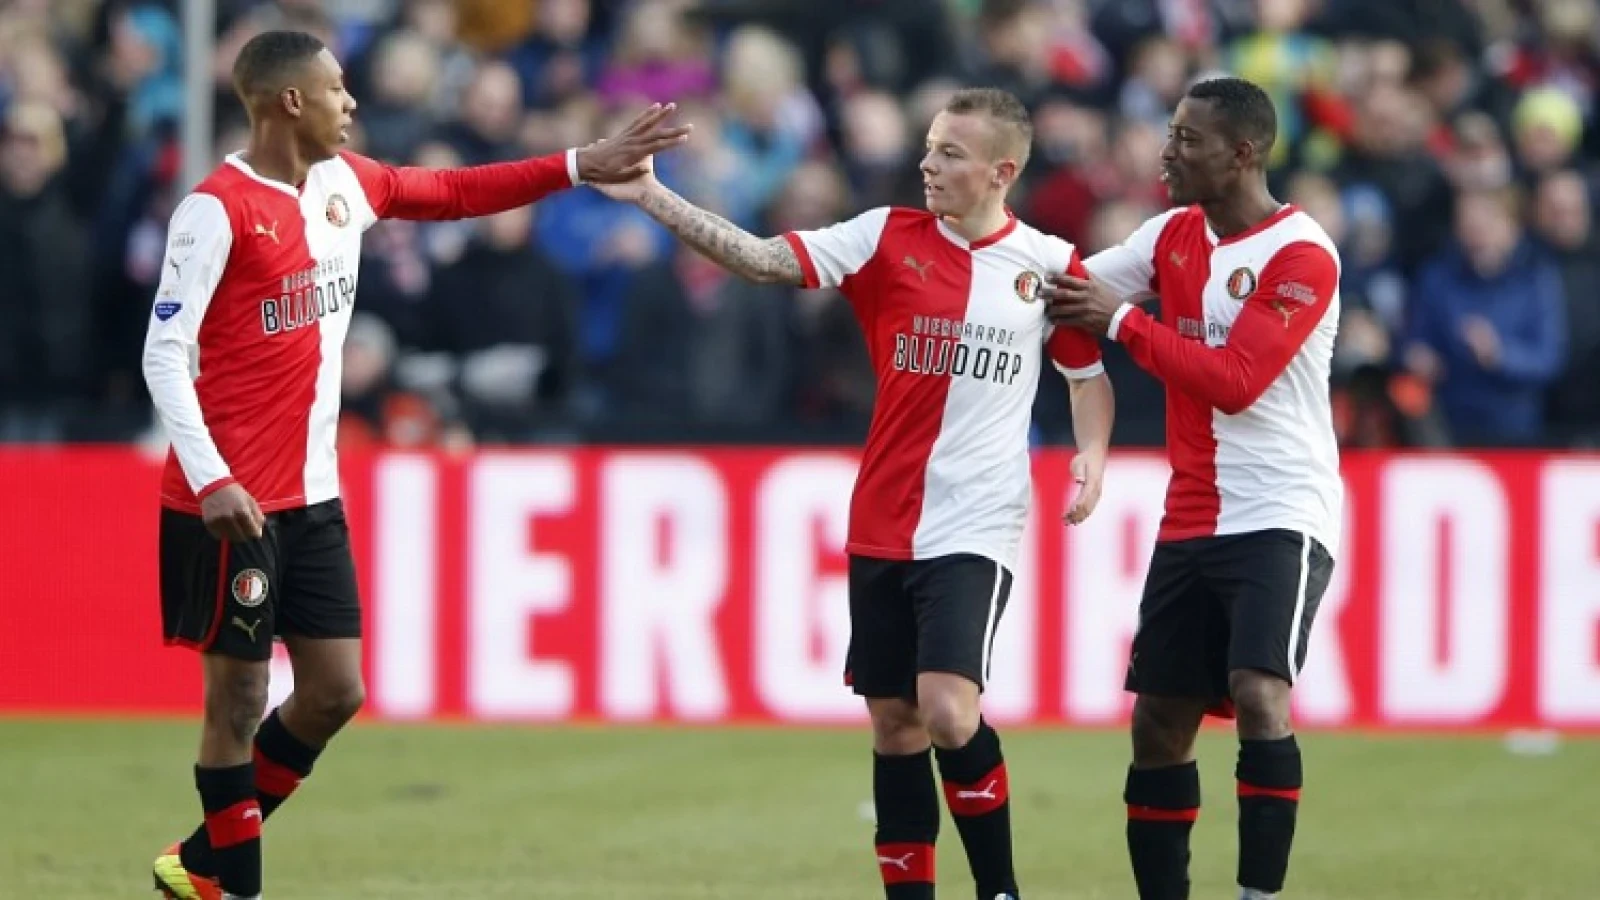 FOTO | Feyenoord-doelwit op de foto met ondermeer Schaken en Manu